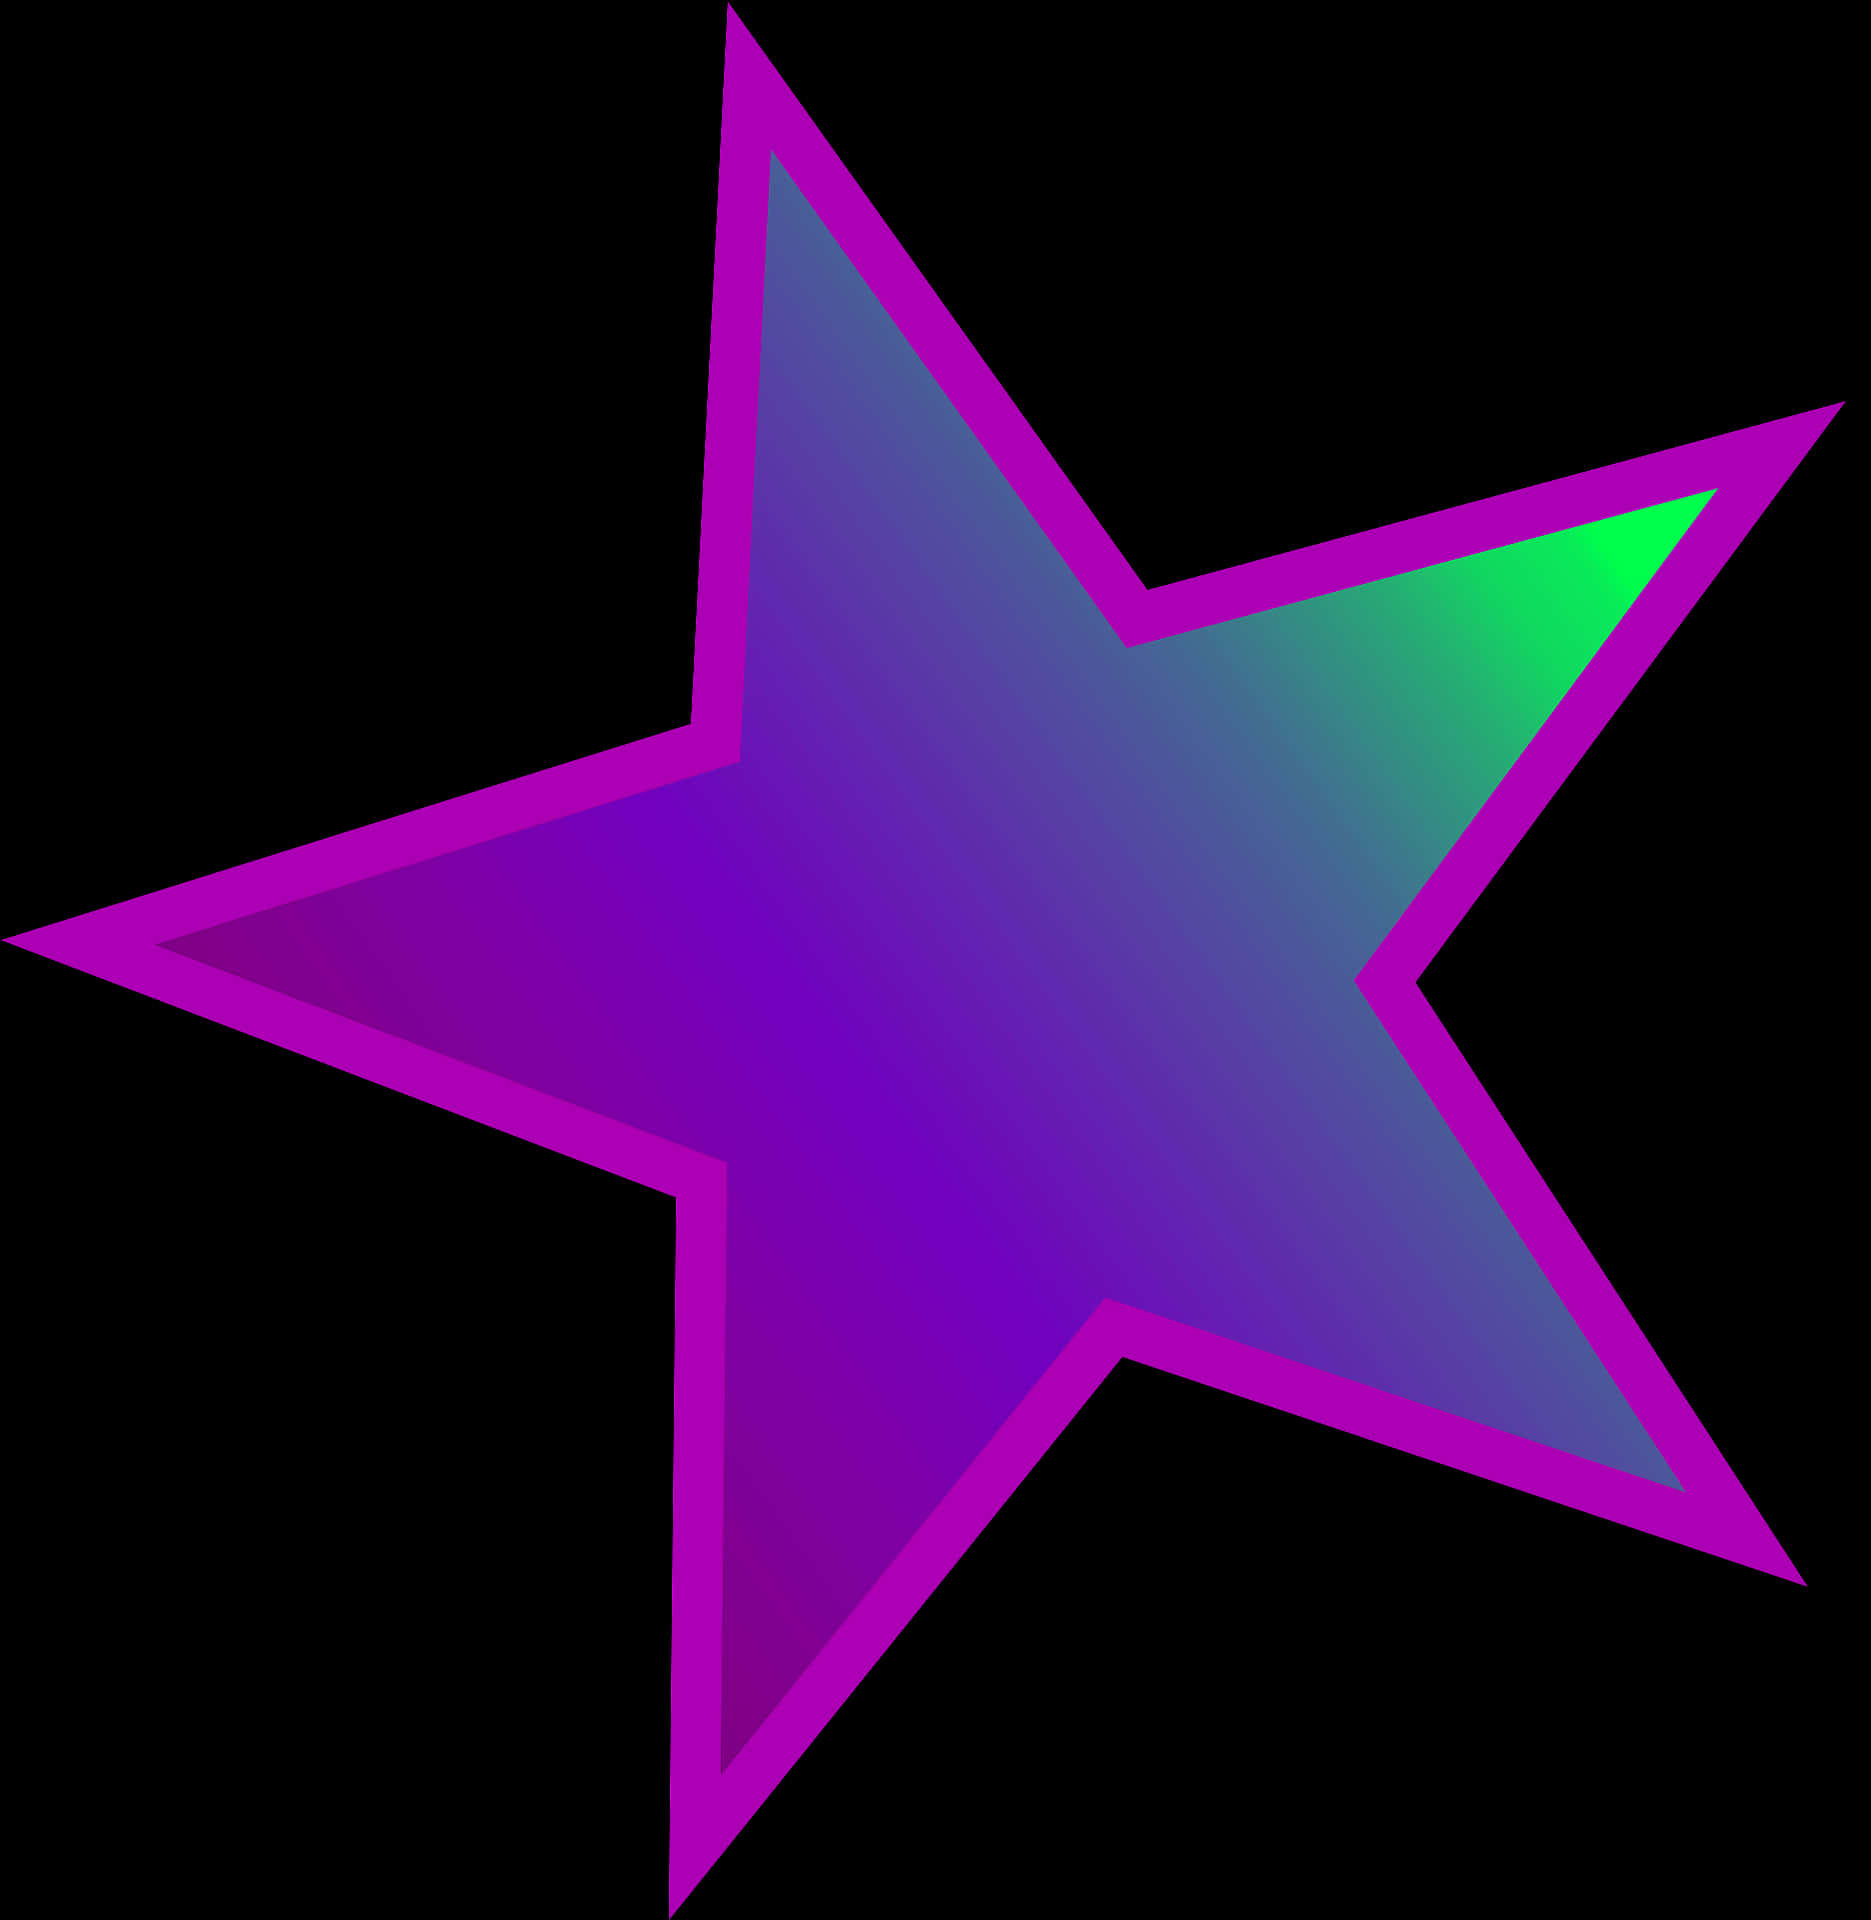 Illuminated Purple Star Twinkles in the Night Sky Wallpaper